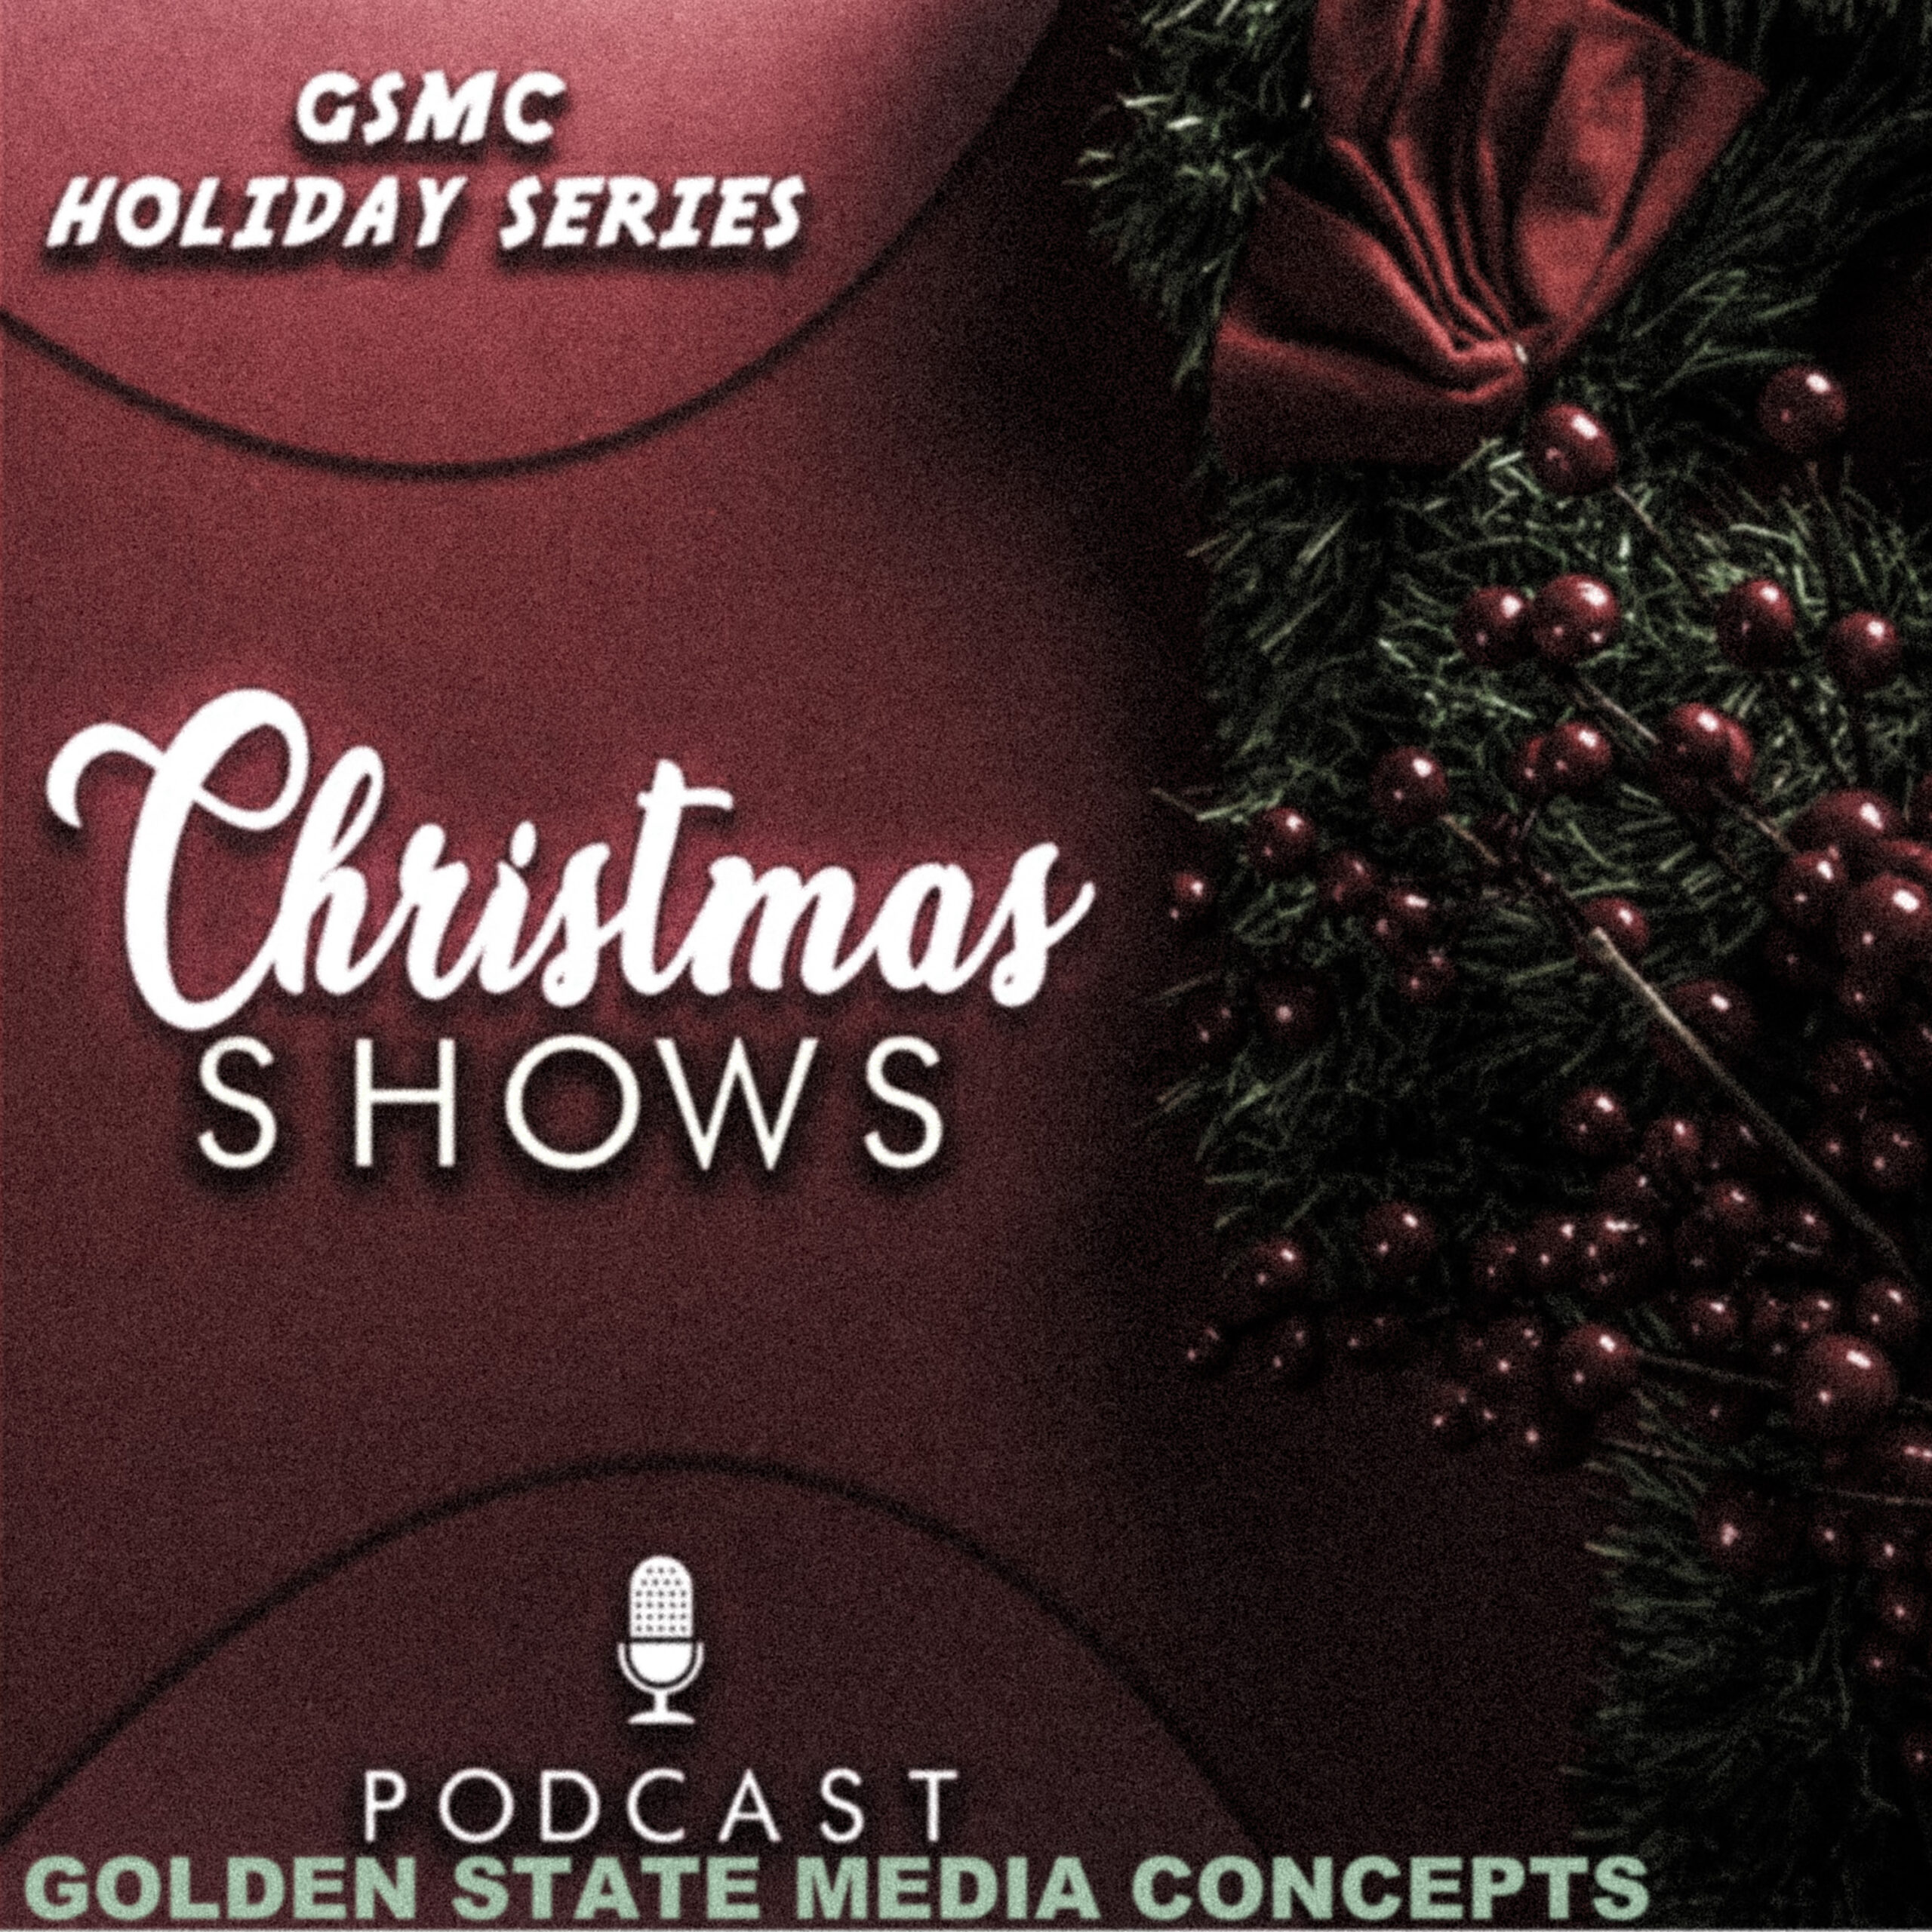 GSMC Holiday Series: Christmas Shows Podcast